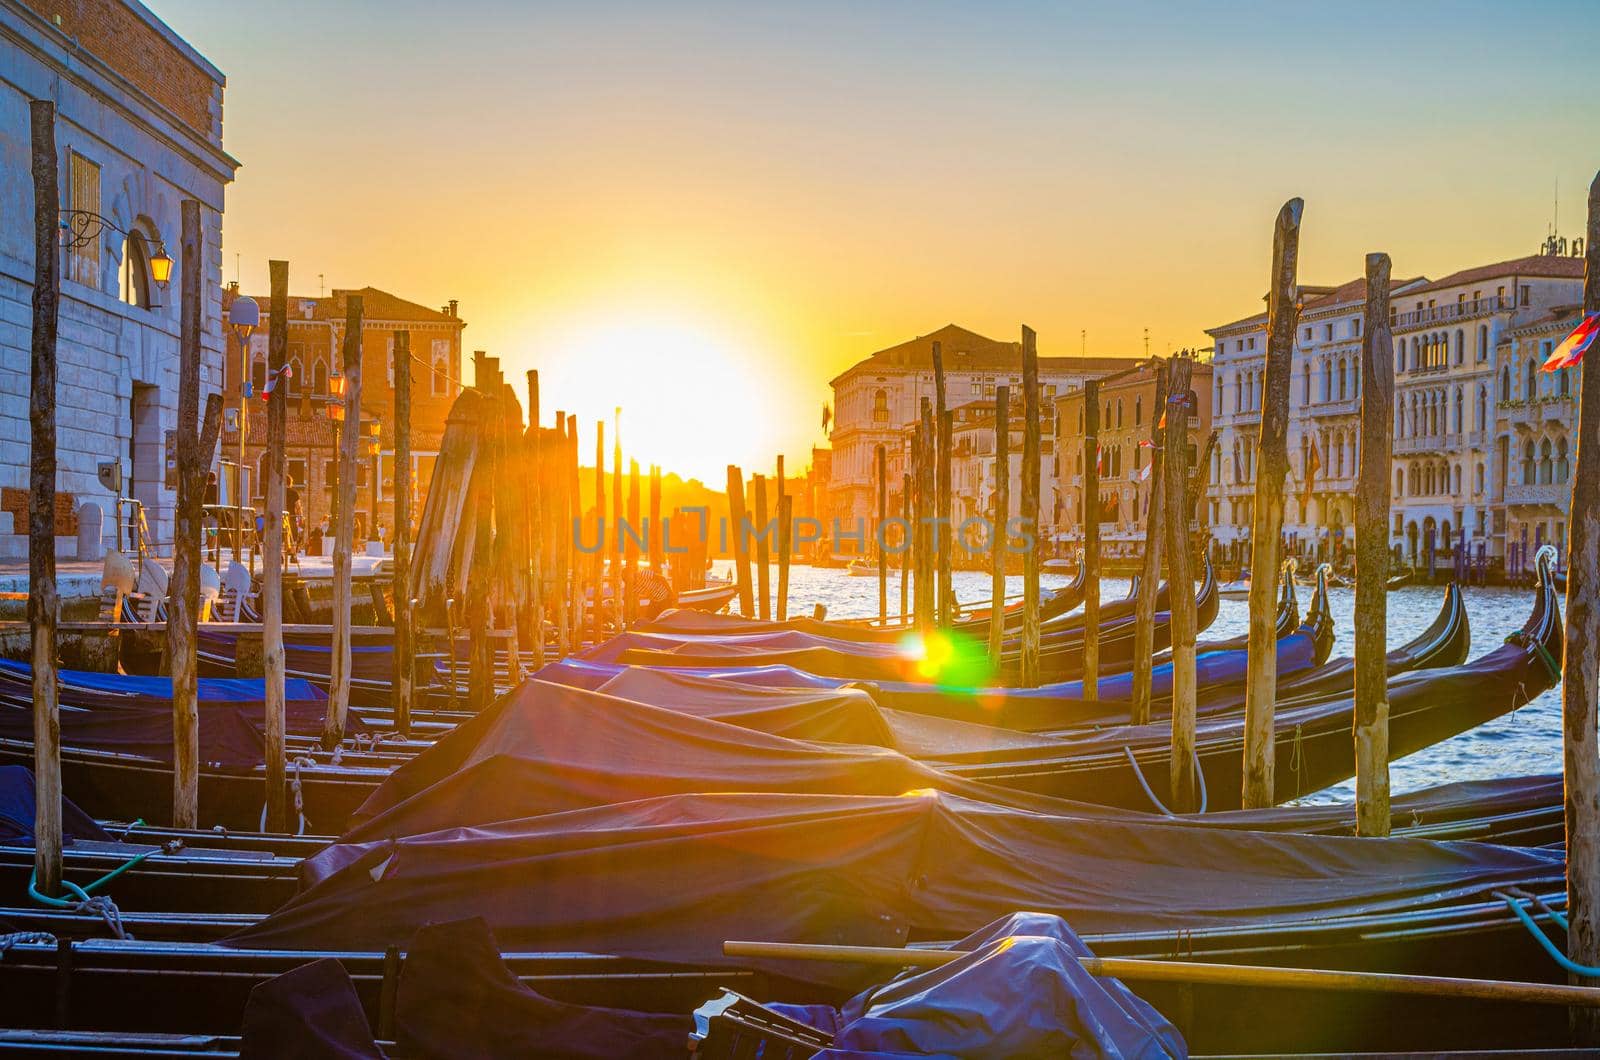 Gondolas moored docked on pier of Grand Canal waterway in Venice by Aliaksandr_Antanovich